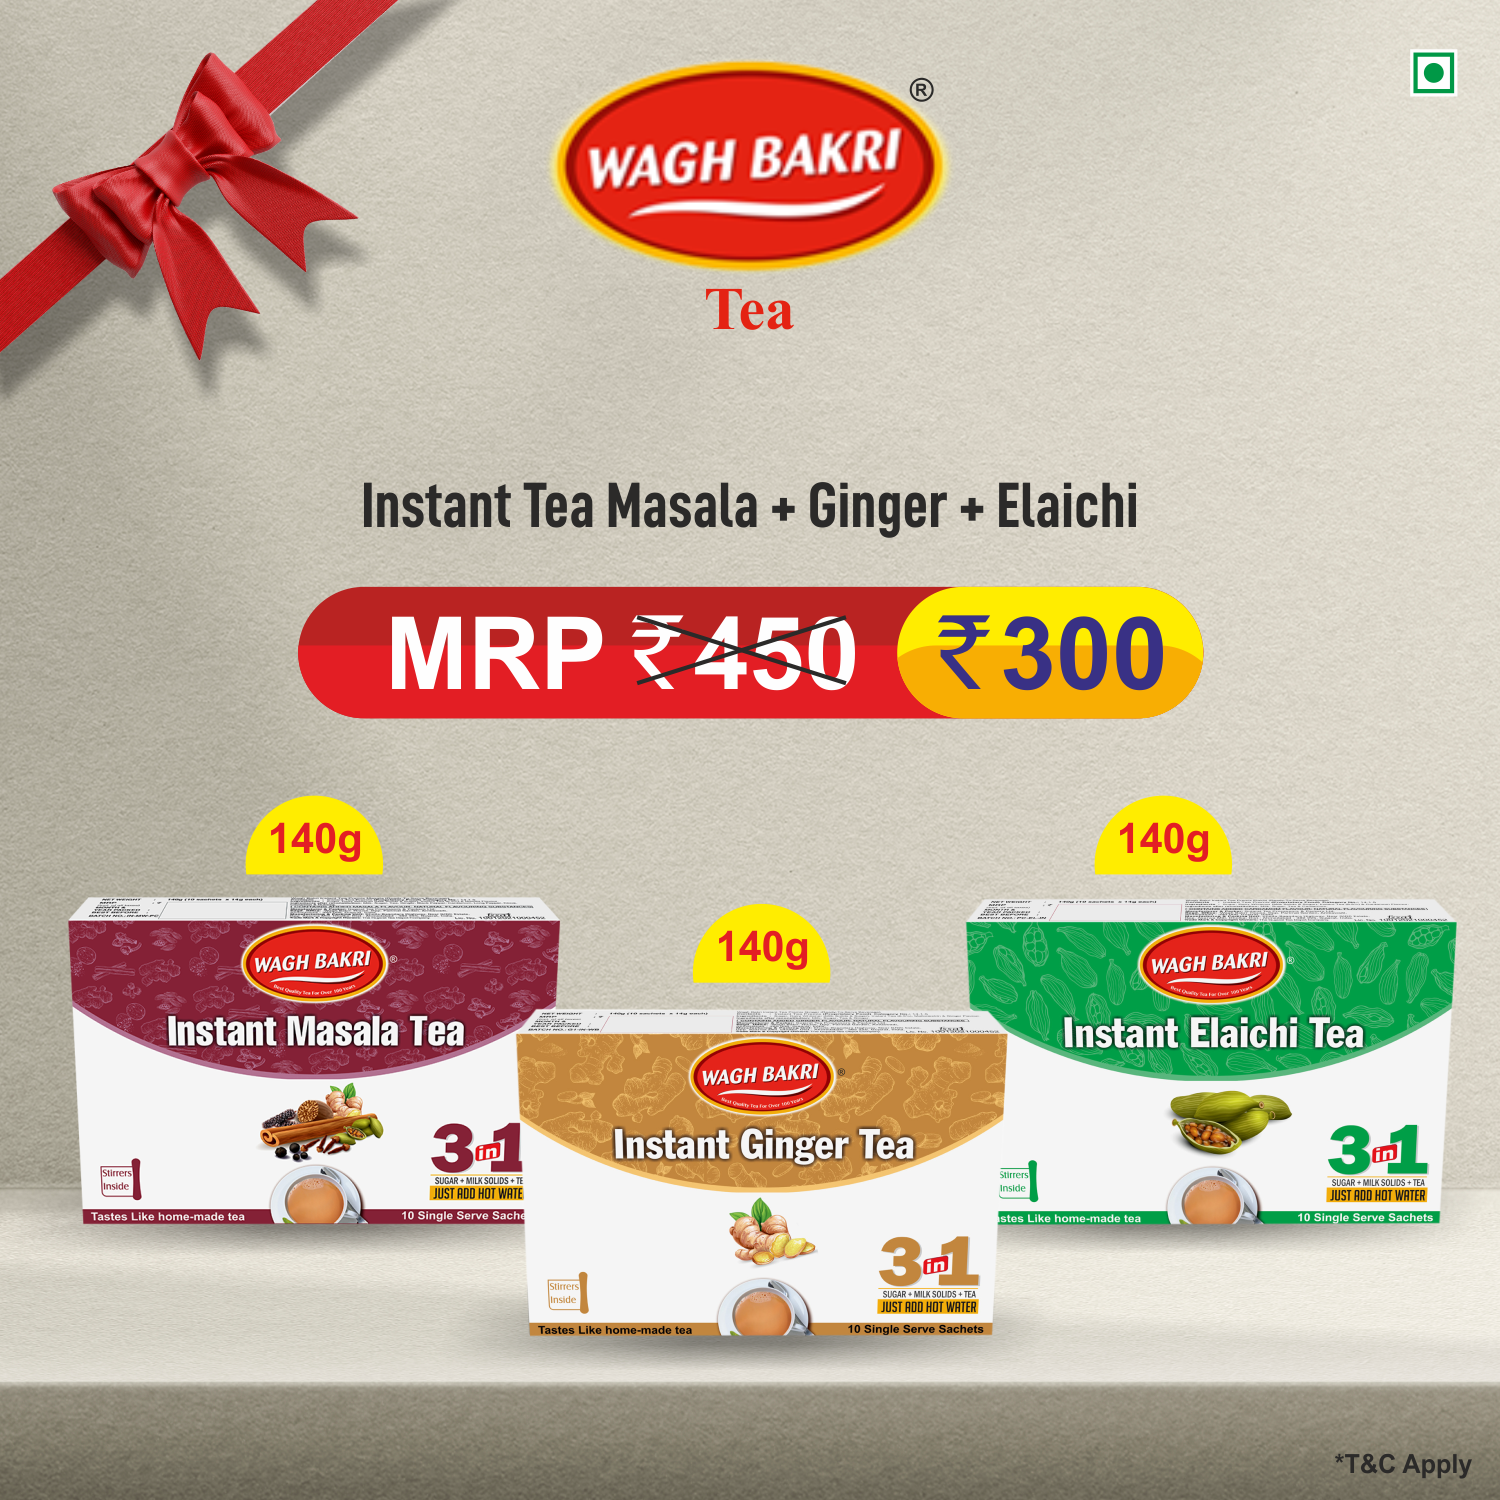 Wagh Bakri Instant Tea Masala + Ginger + Elaichi Combo Pack